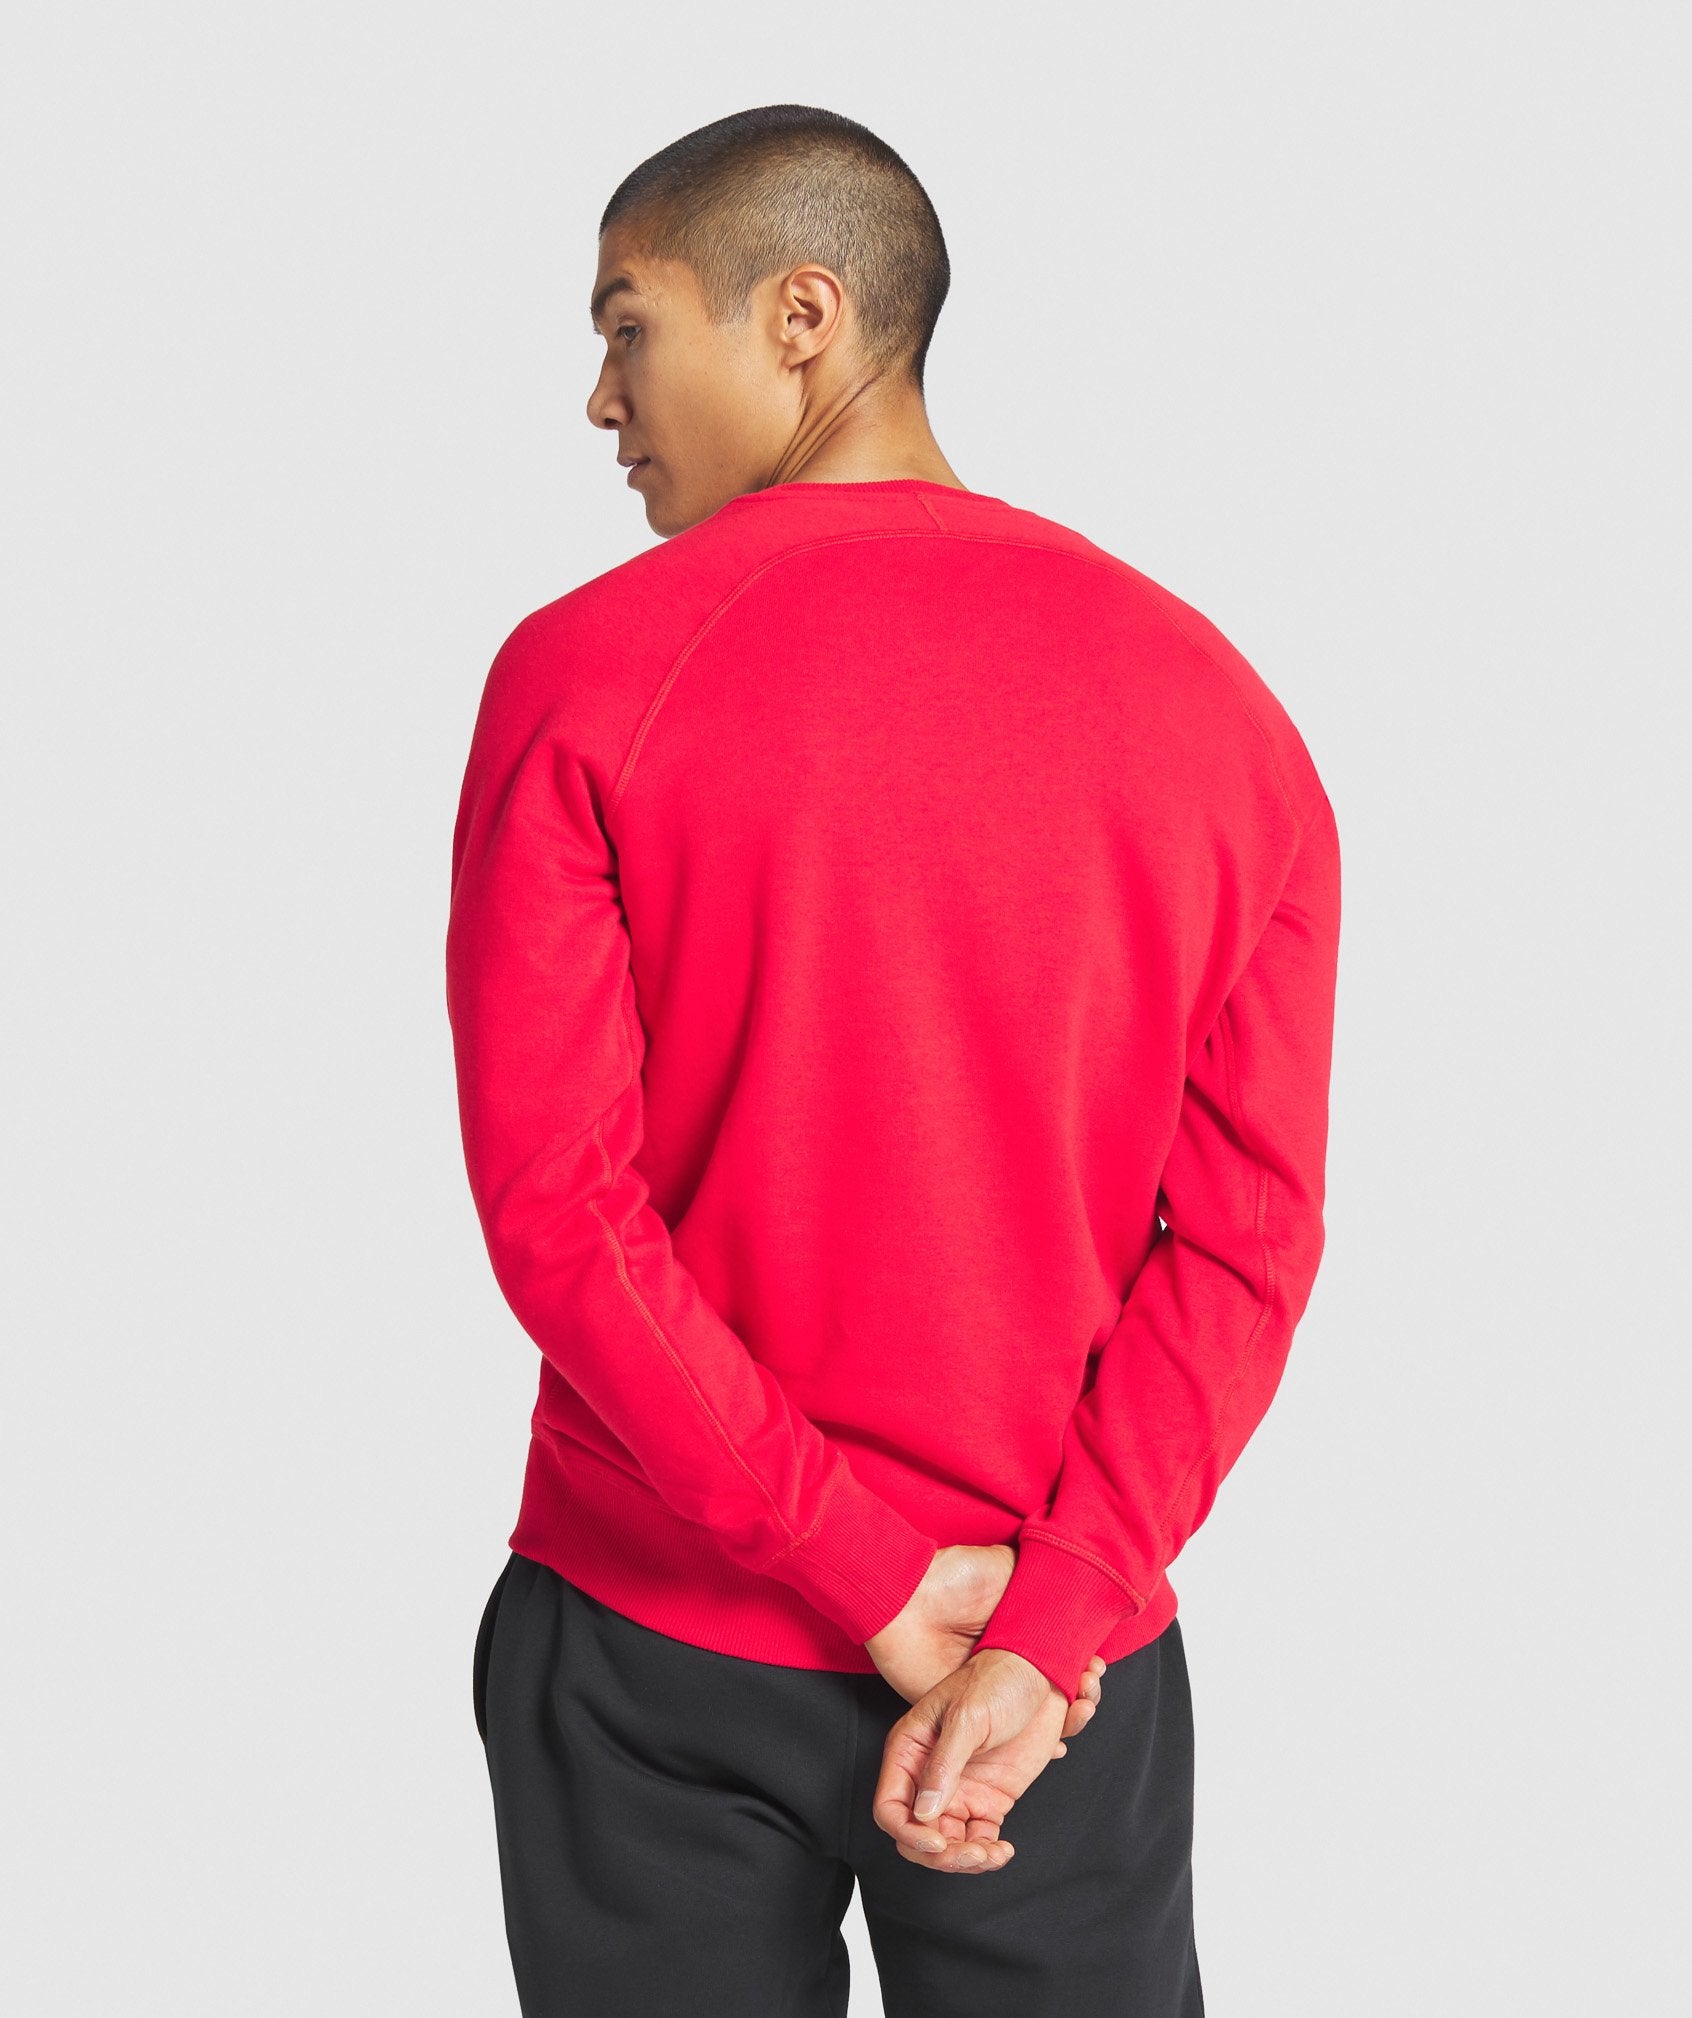 Crest Sweatshirt in Red - view 3